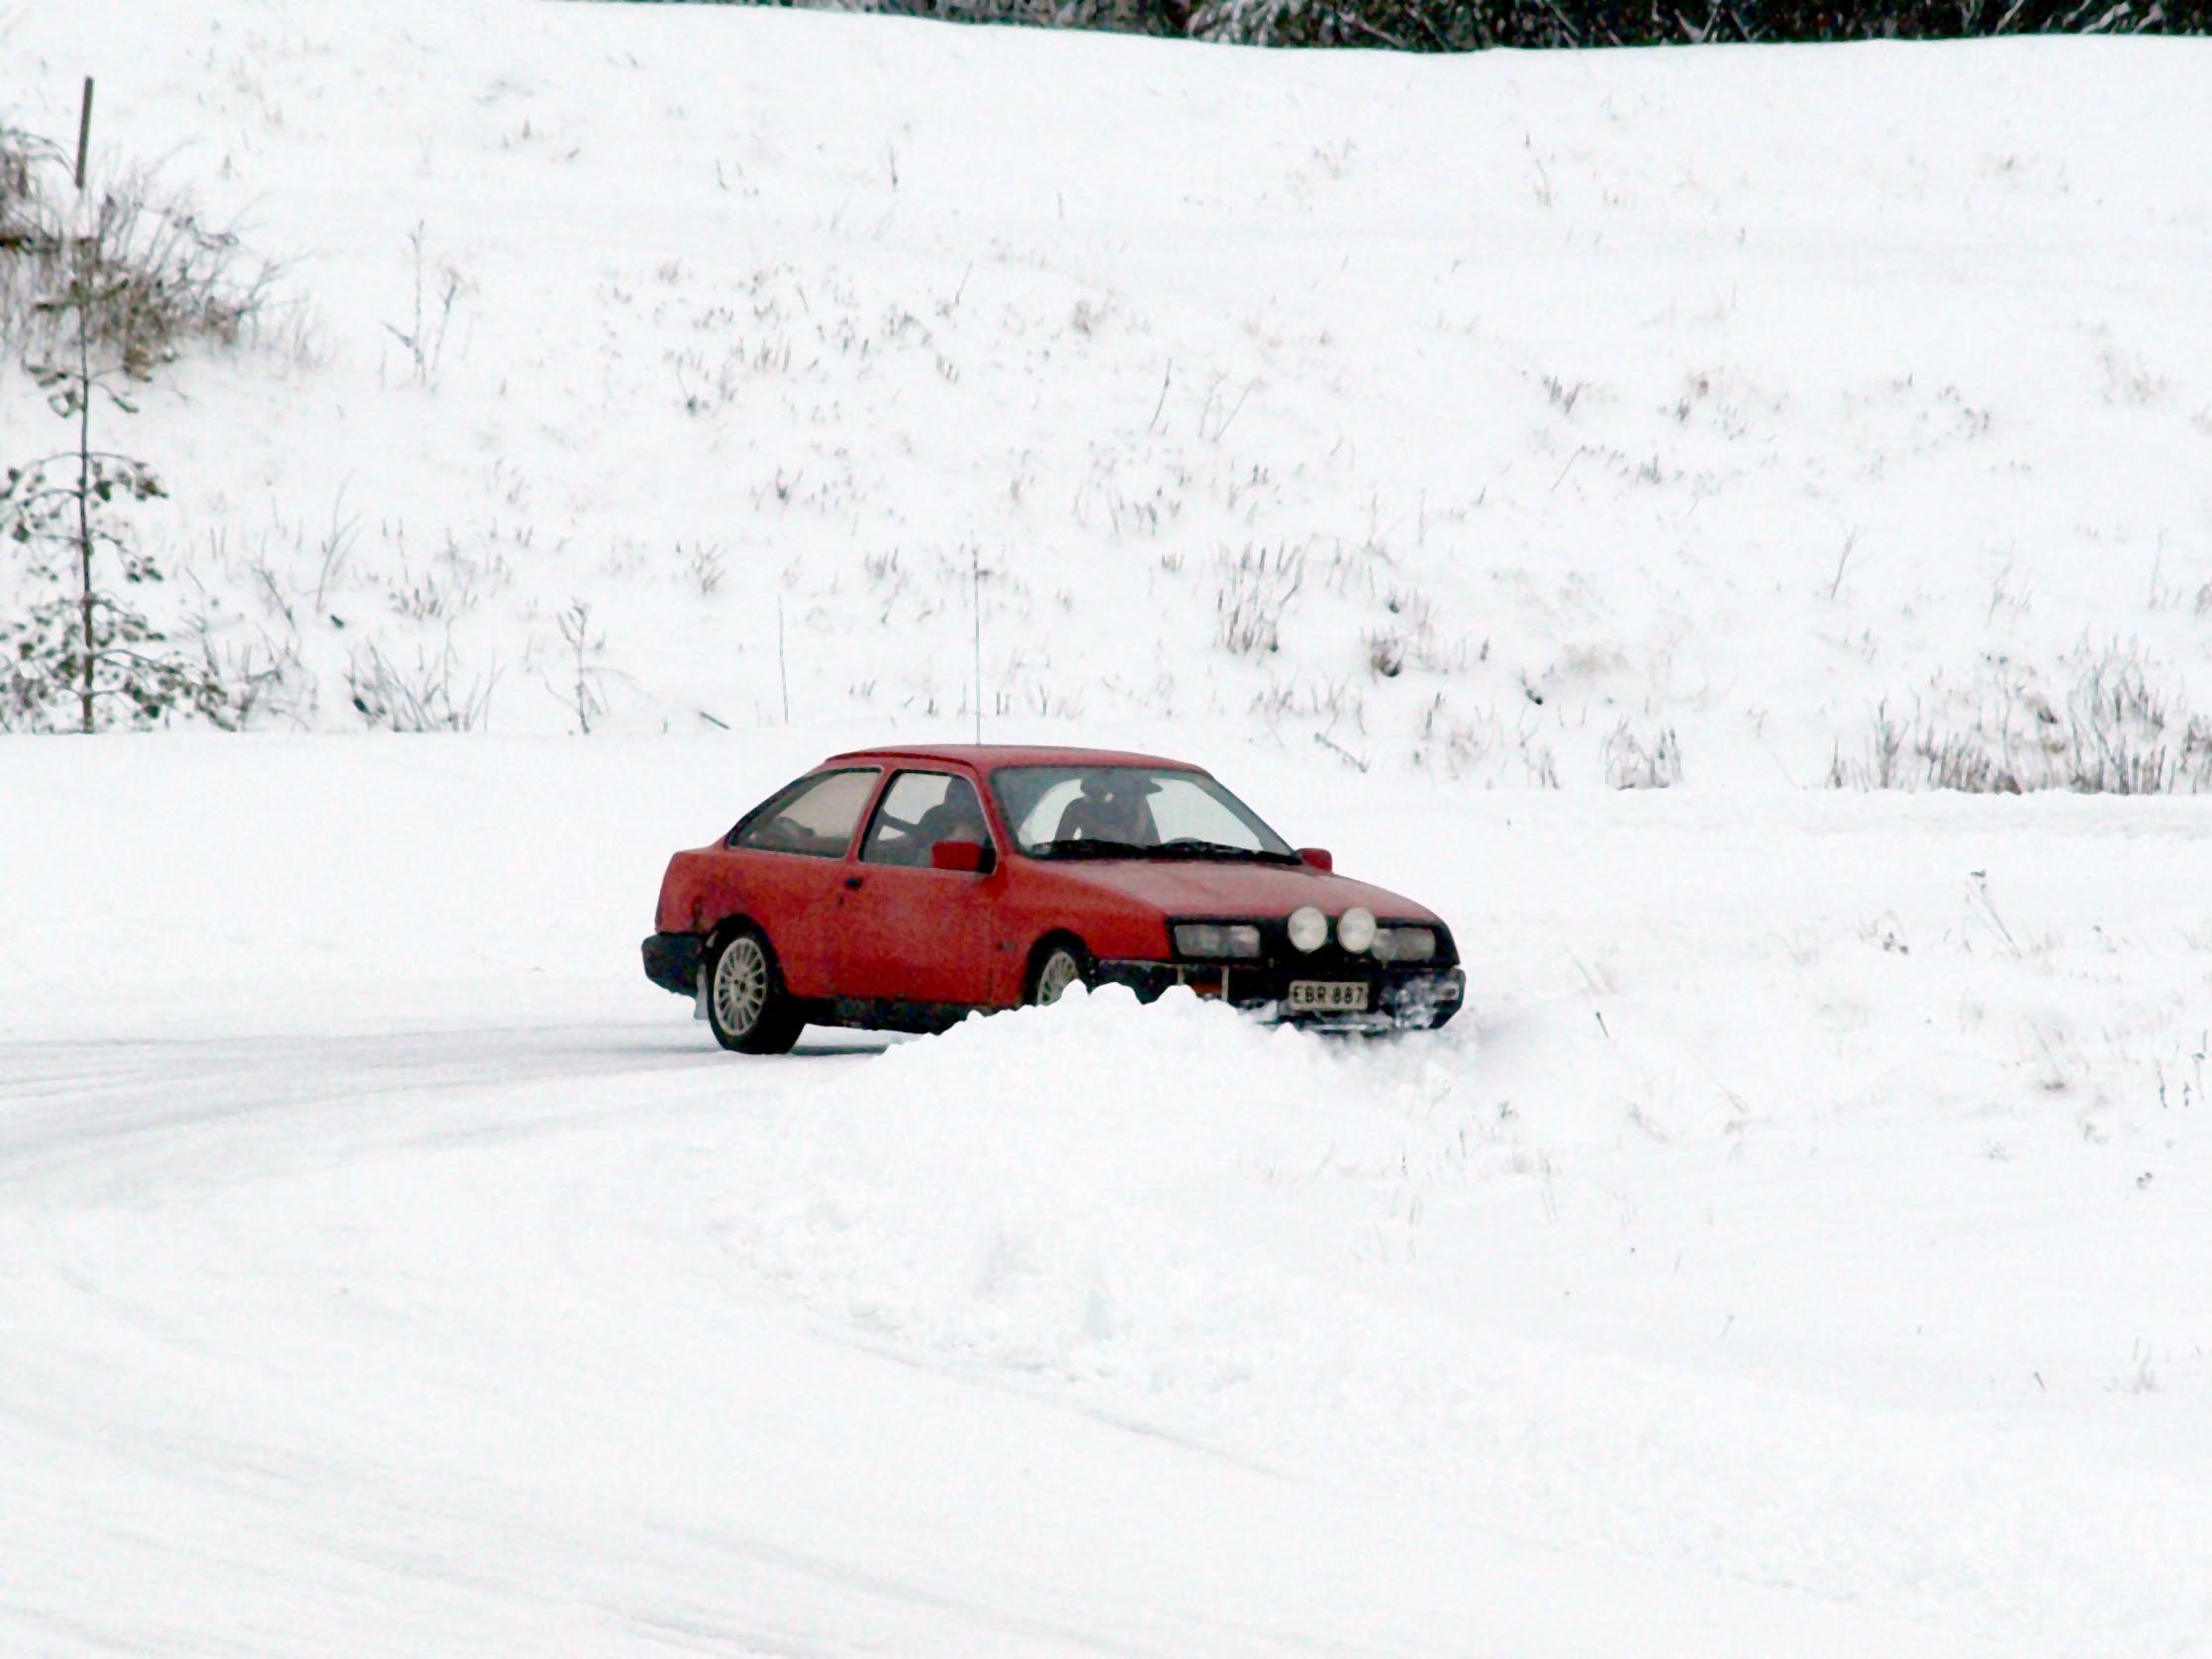 Radalle.com jÃ¤Ã¤ratapÃ¤ivÃ¤ 24.1.2009 HyvinkÃ¤Ã¤, Punainen Ford Sierra lumipenkassa jÃ¤Ã¤radalla